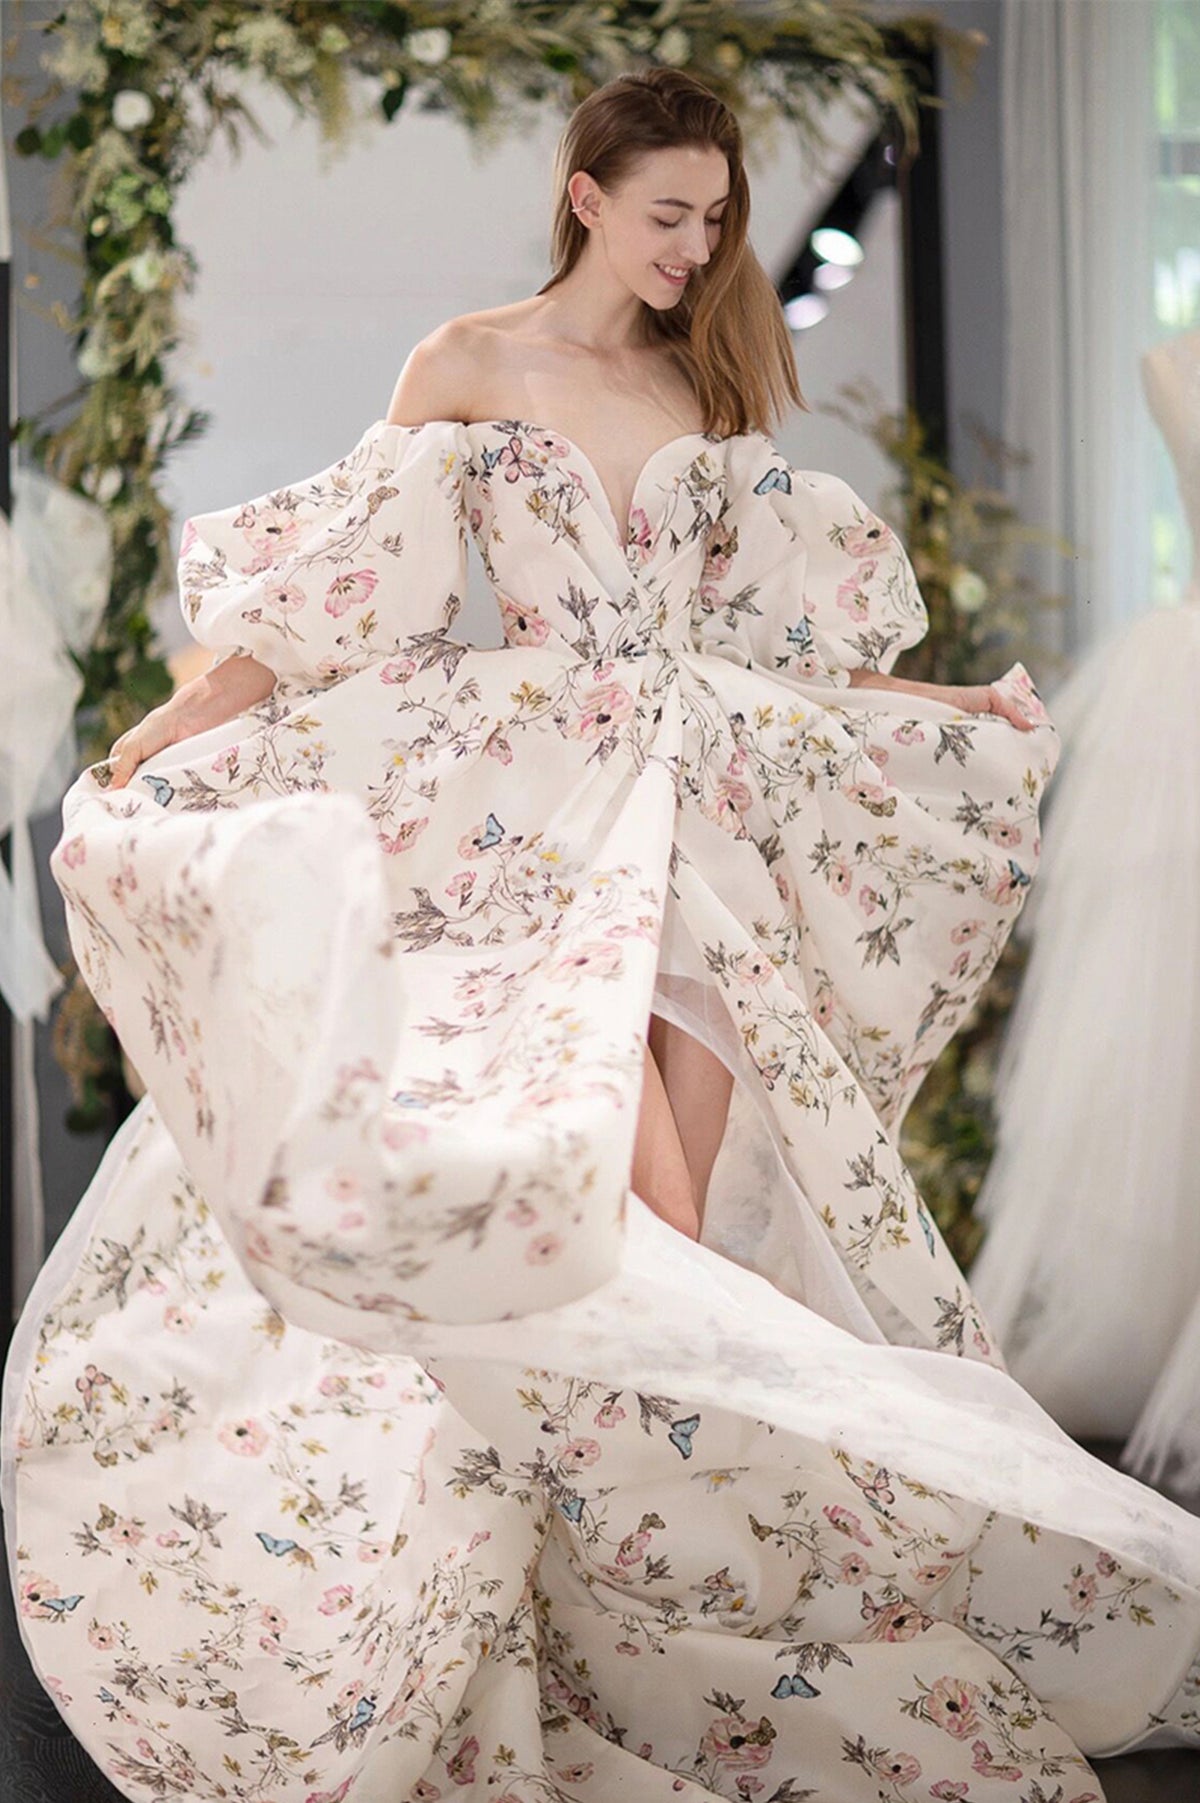 Stylish Printed Pattern Long Prom Dress, White Long Sleeve Evening Party Dress